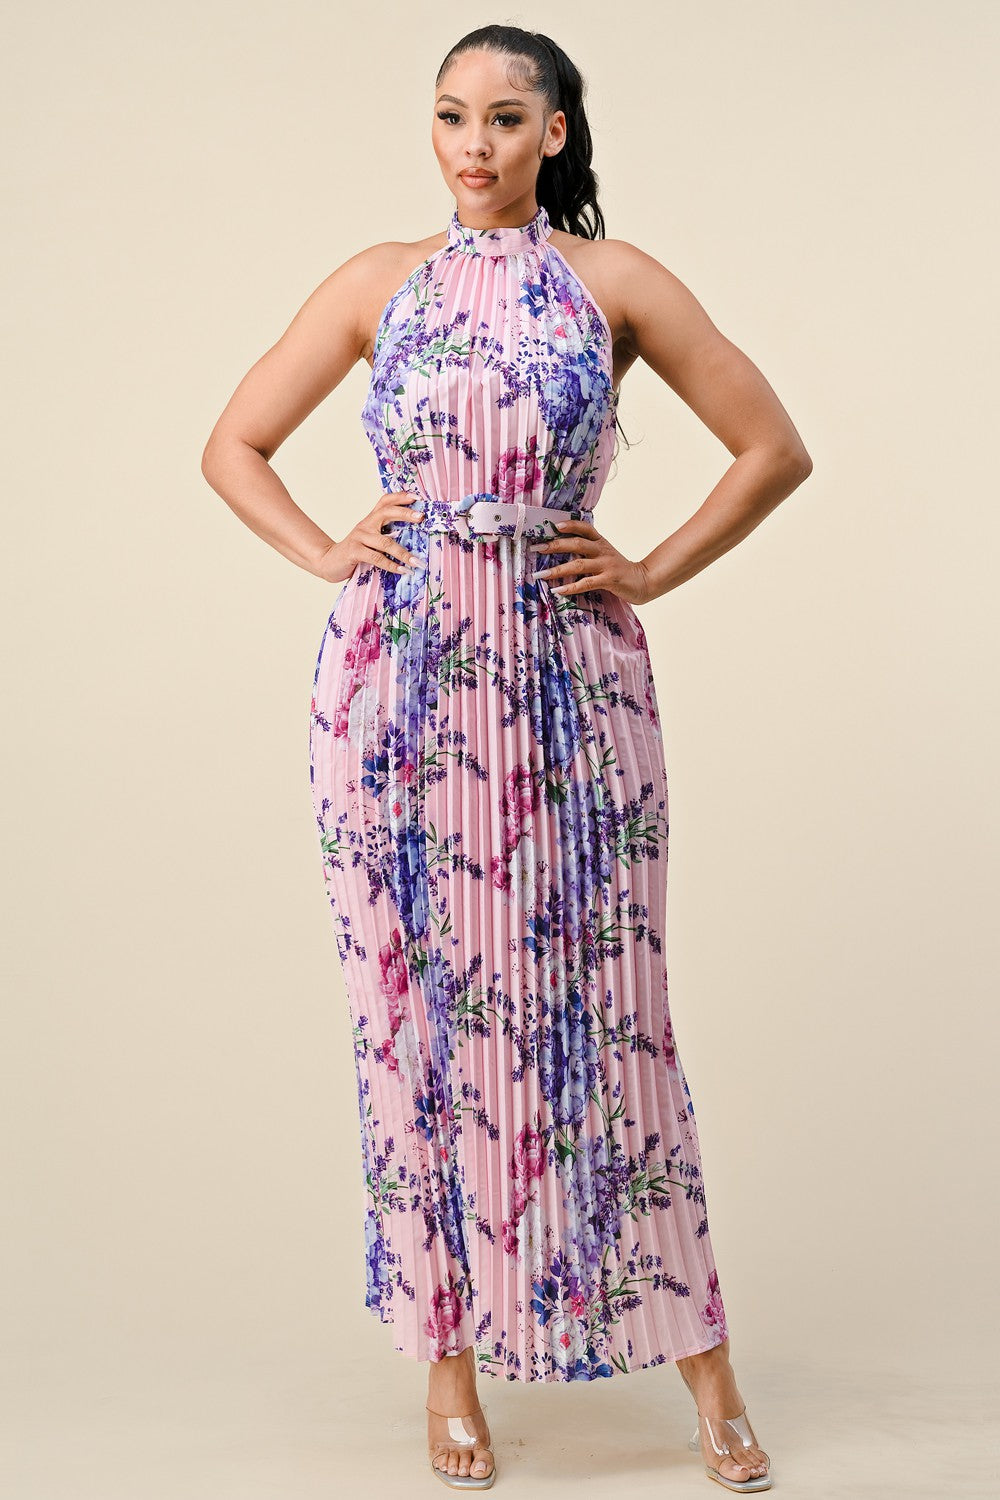 Floral Occasion Dress (Pink/Multi) (FINAL SALE)